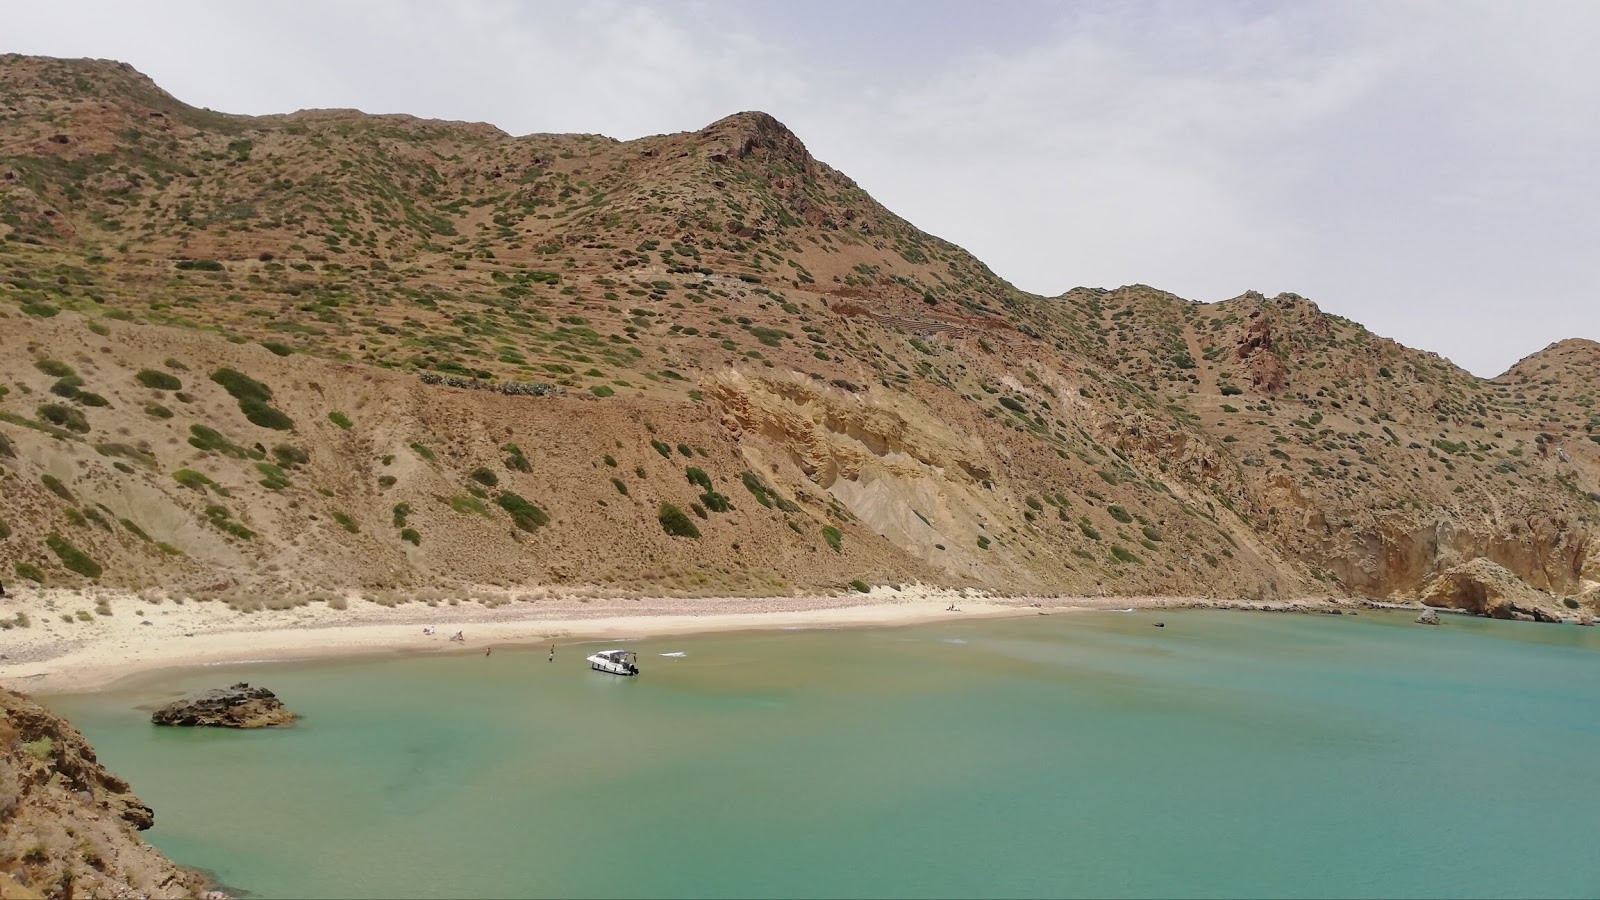 Fotografija Tibouda beach nahaja se v naravnem okolju